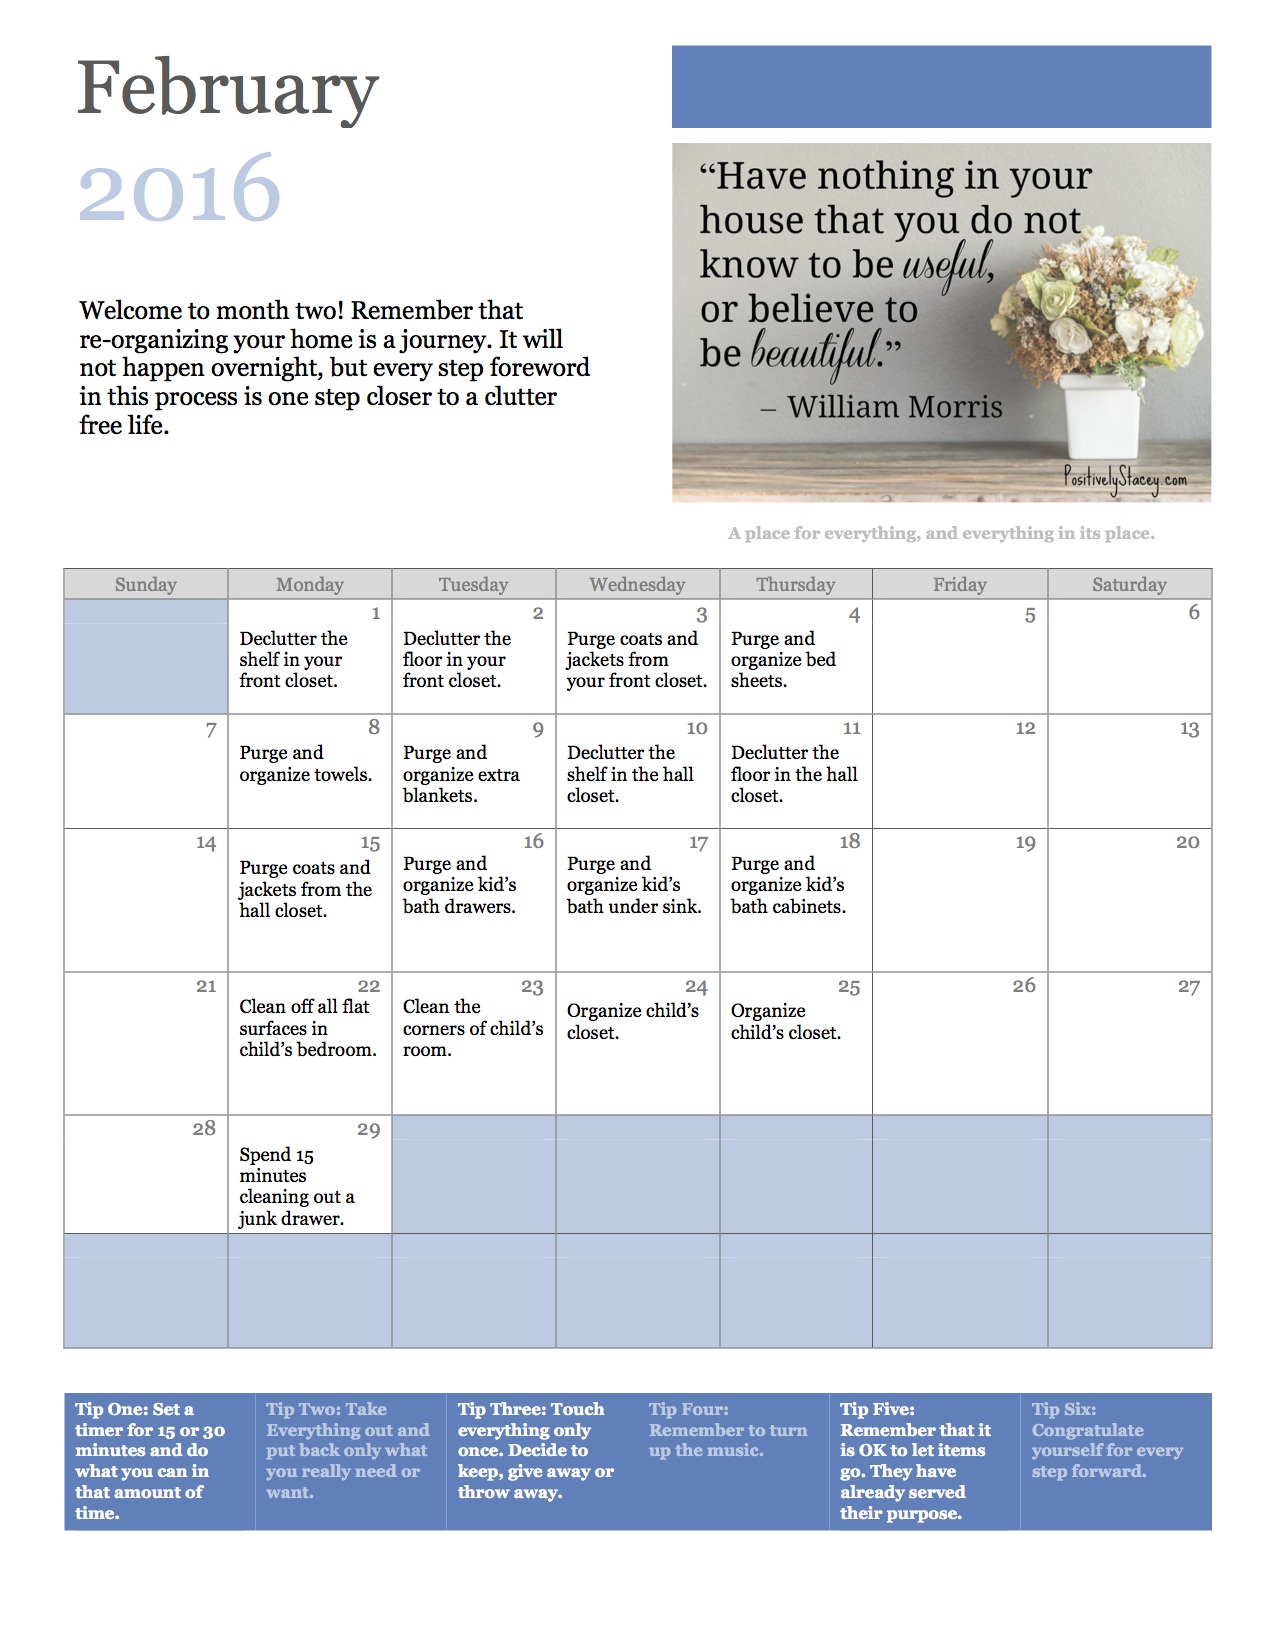 February Home Organization Plan copy